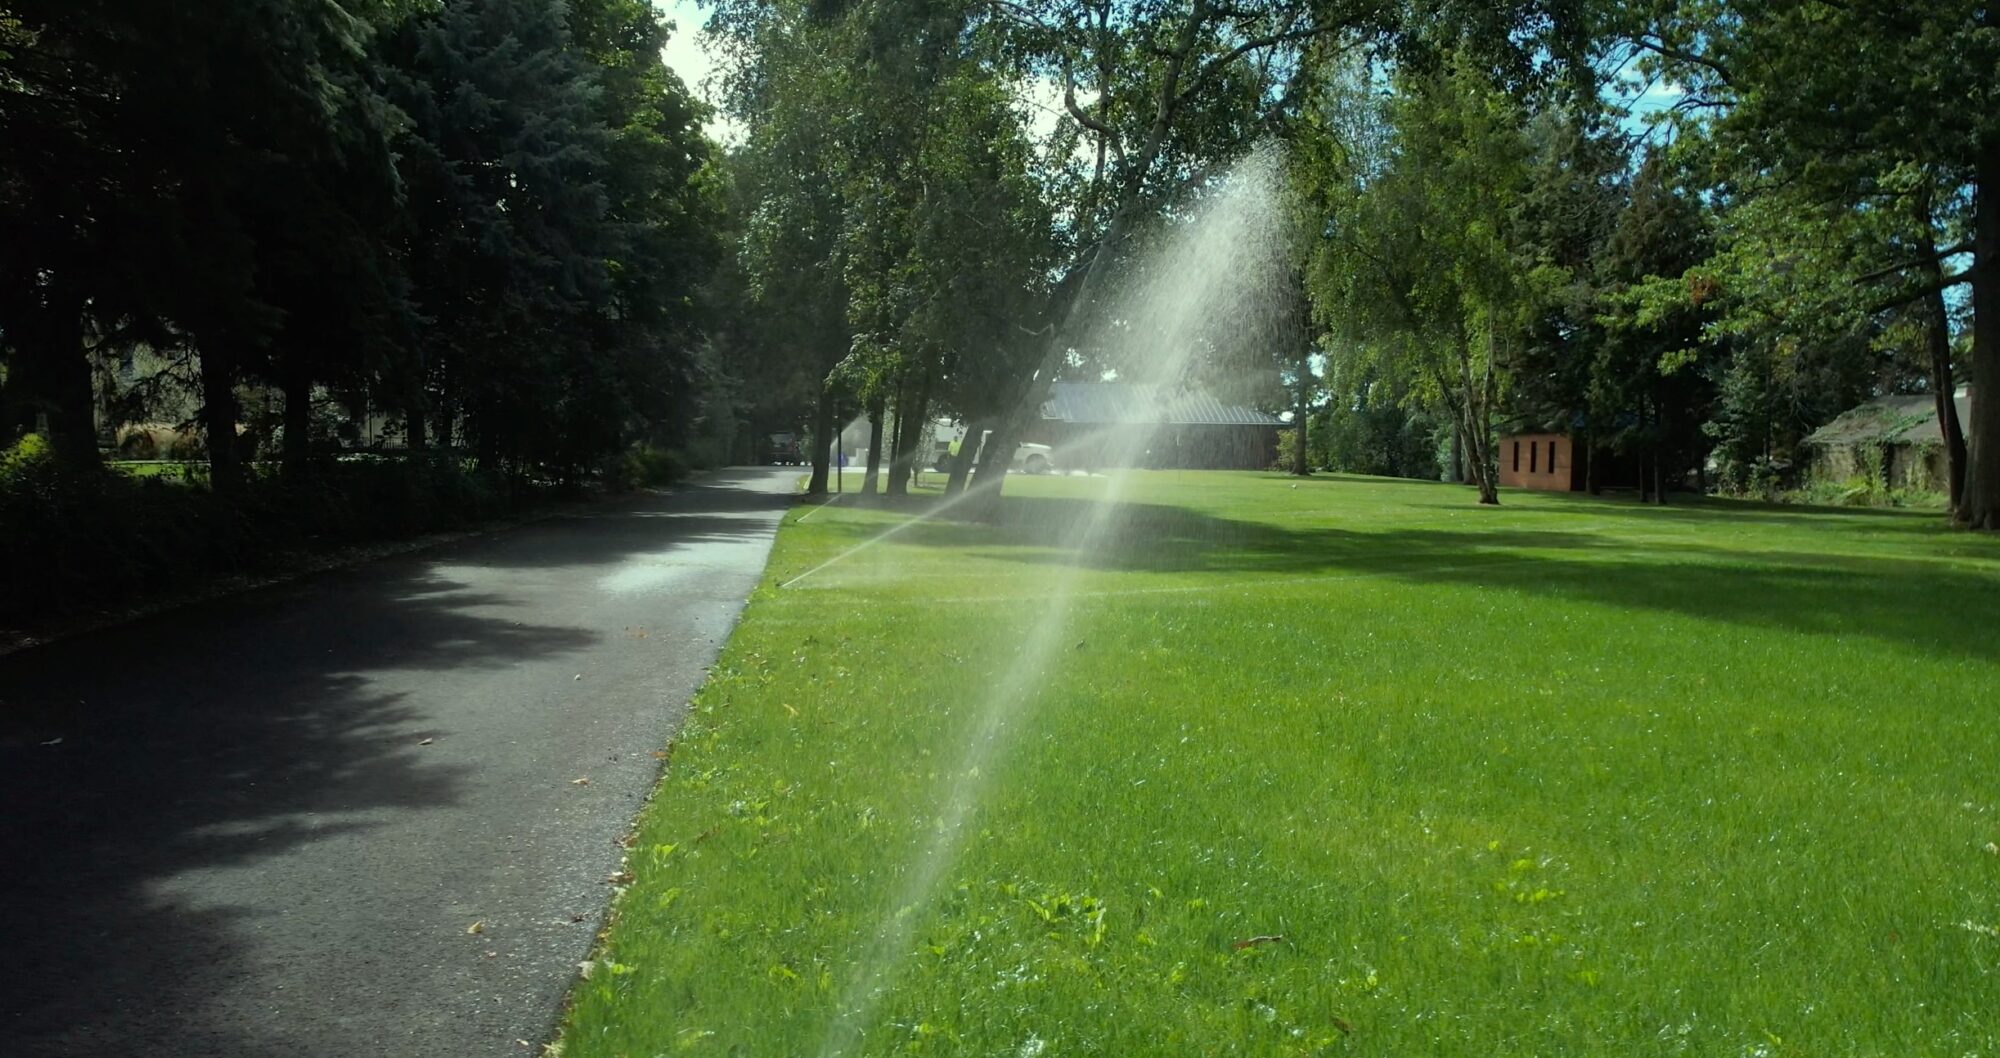 Acme lawn sprinkler system